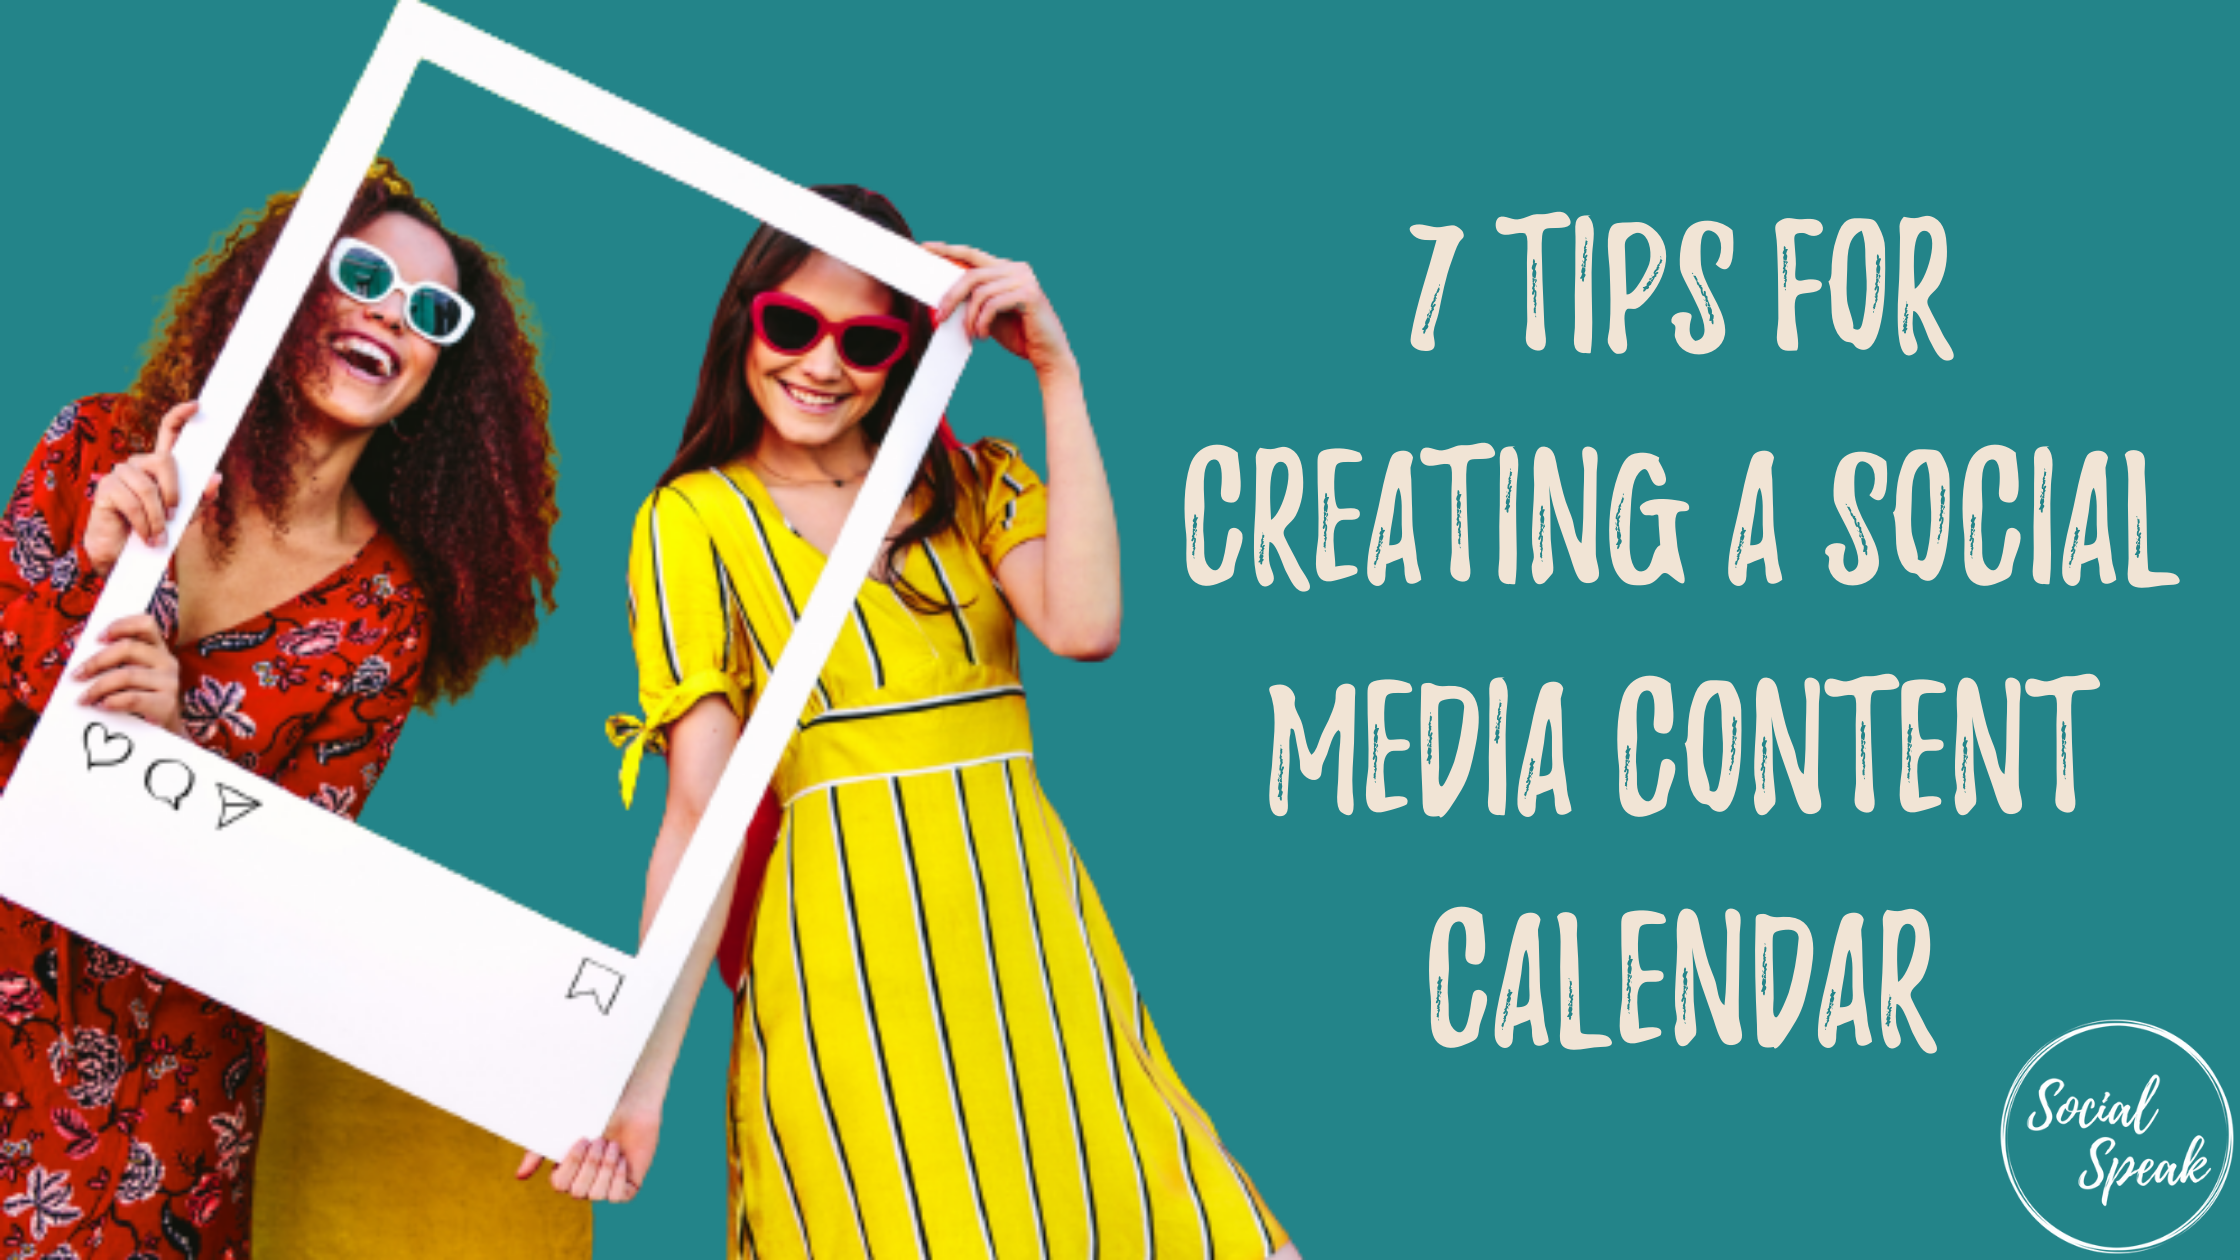 7 Tips for Creating a Social Media Content Calendar Social Speak